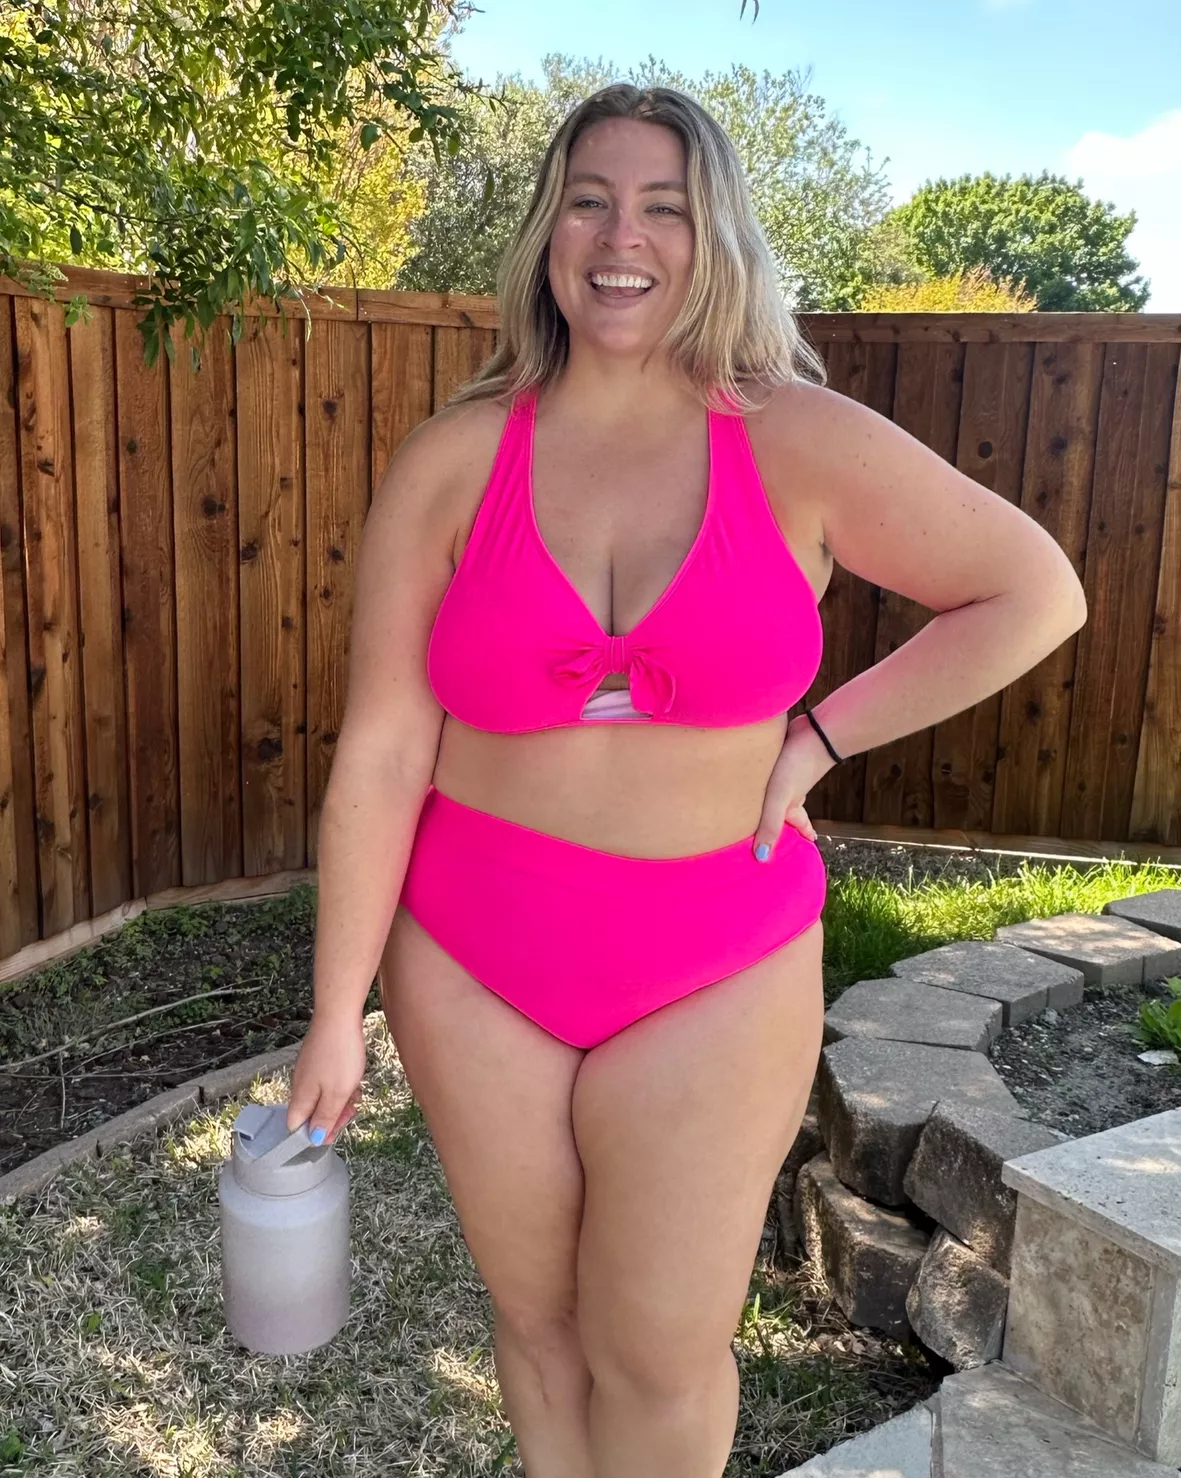 Plus Size Tummy Control Swimwear Bikini High Waisted Two Piece-Neon Pi –  Yonique